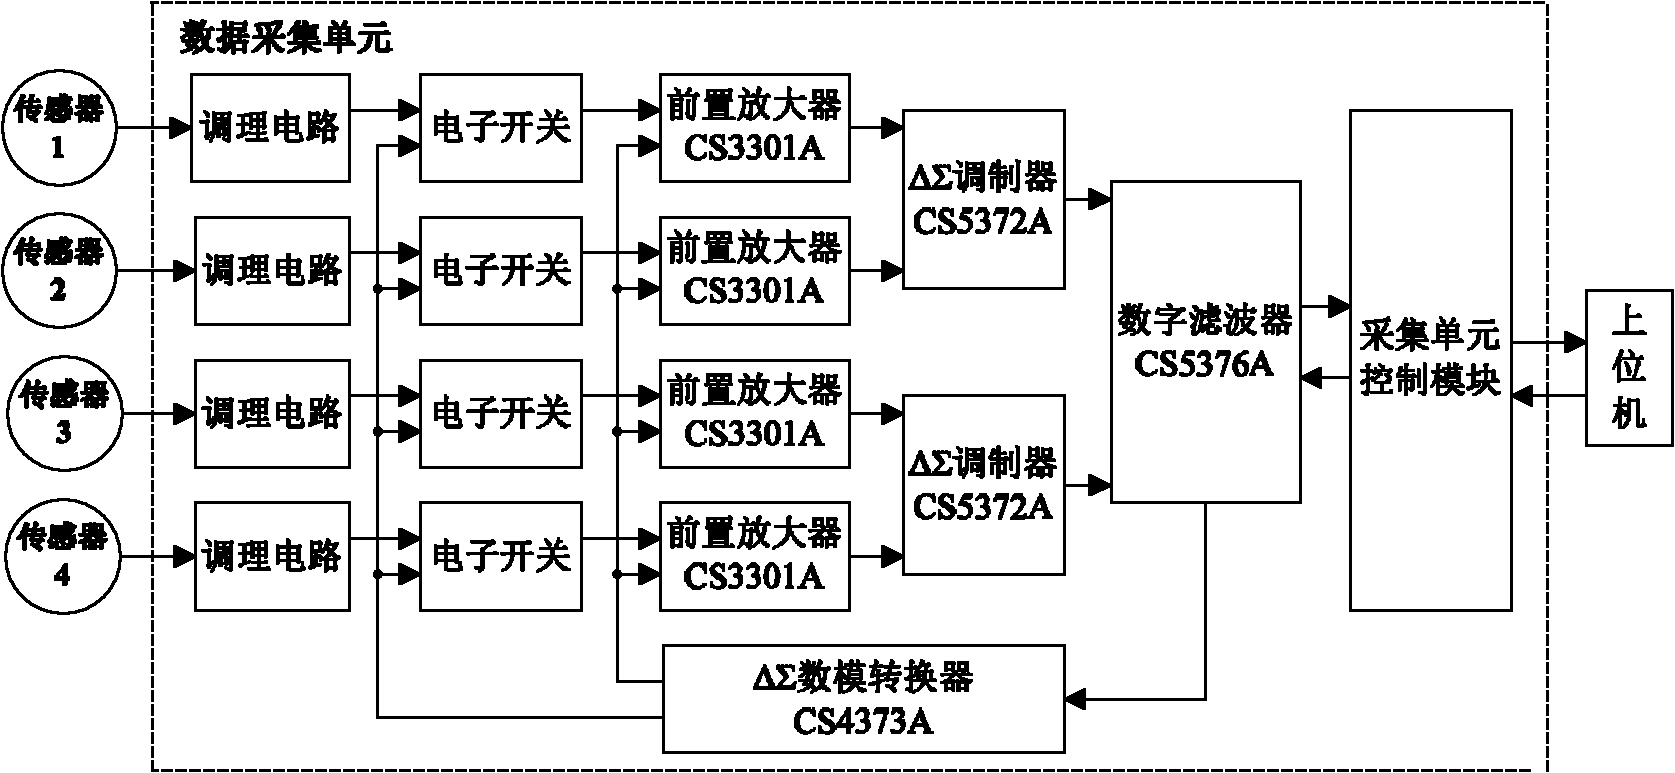 Multi-channel data collection unit